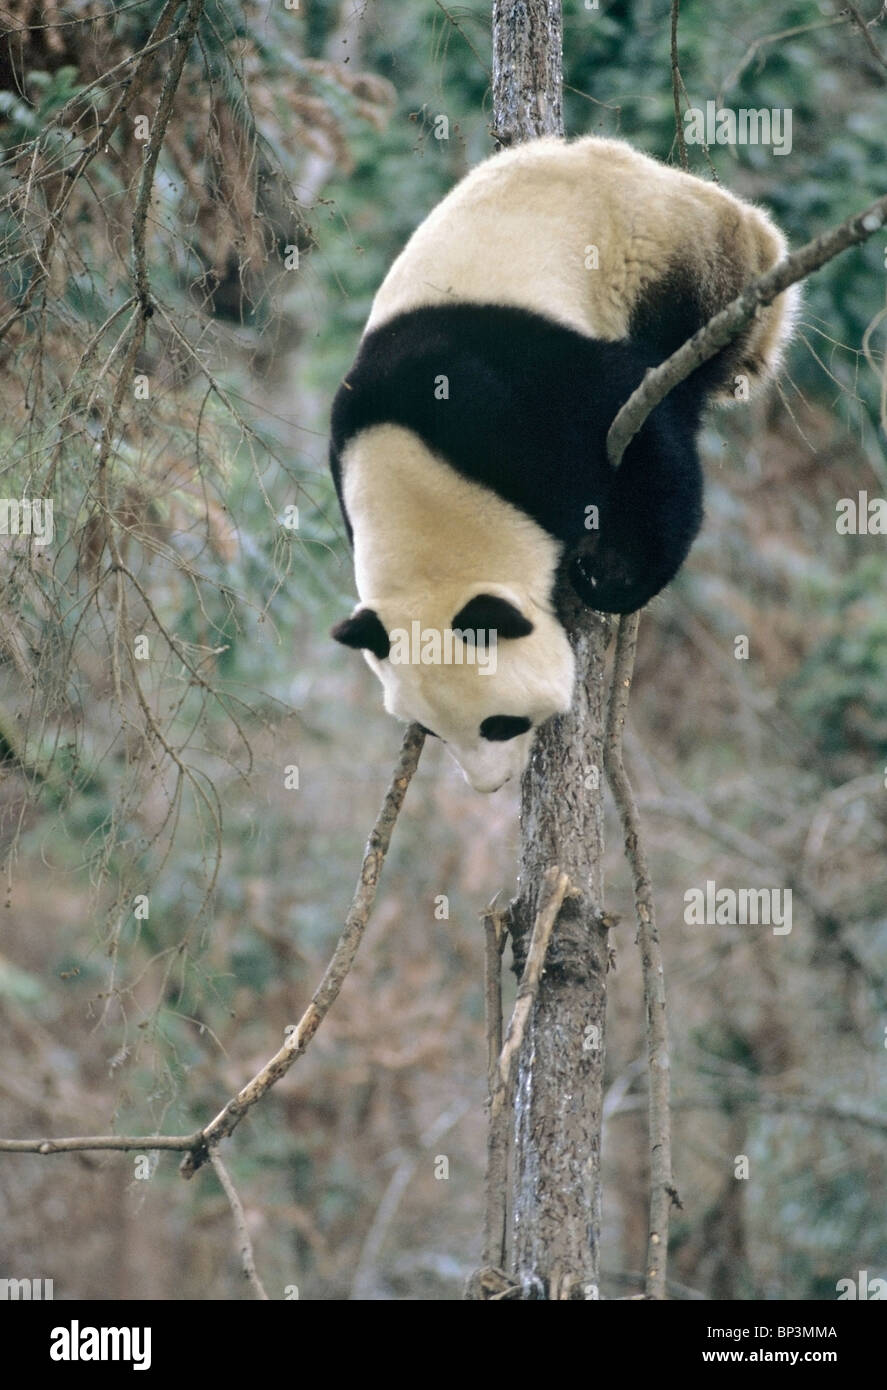 Giant panda climbs down tree in winter, Wolong, China, January Stock Photo